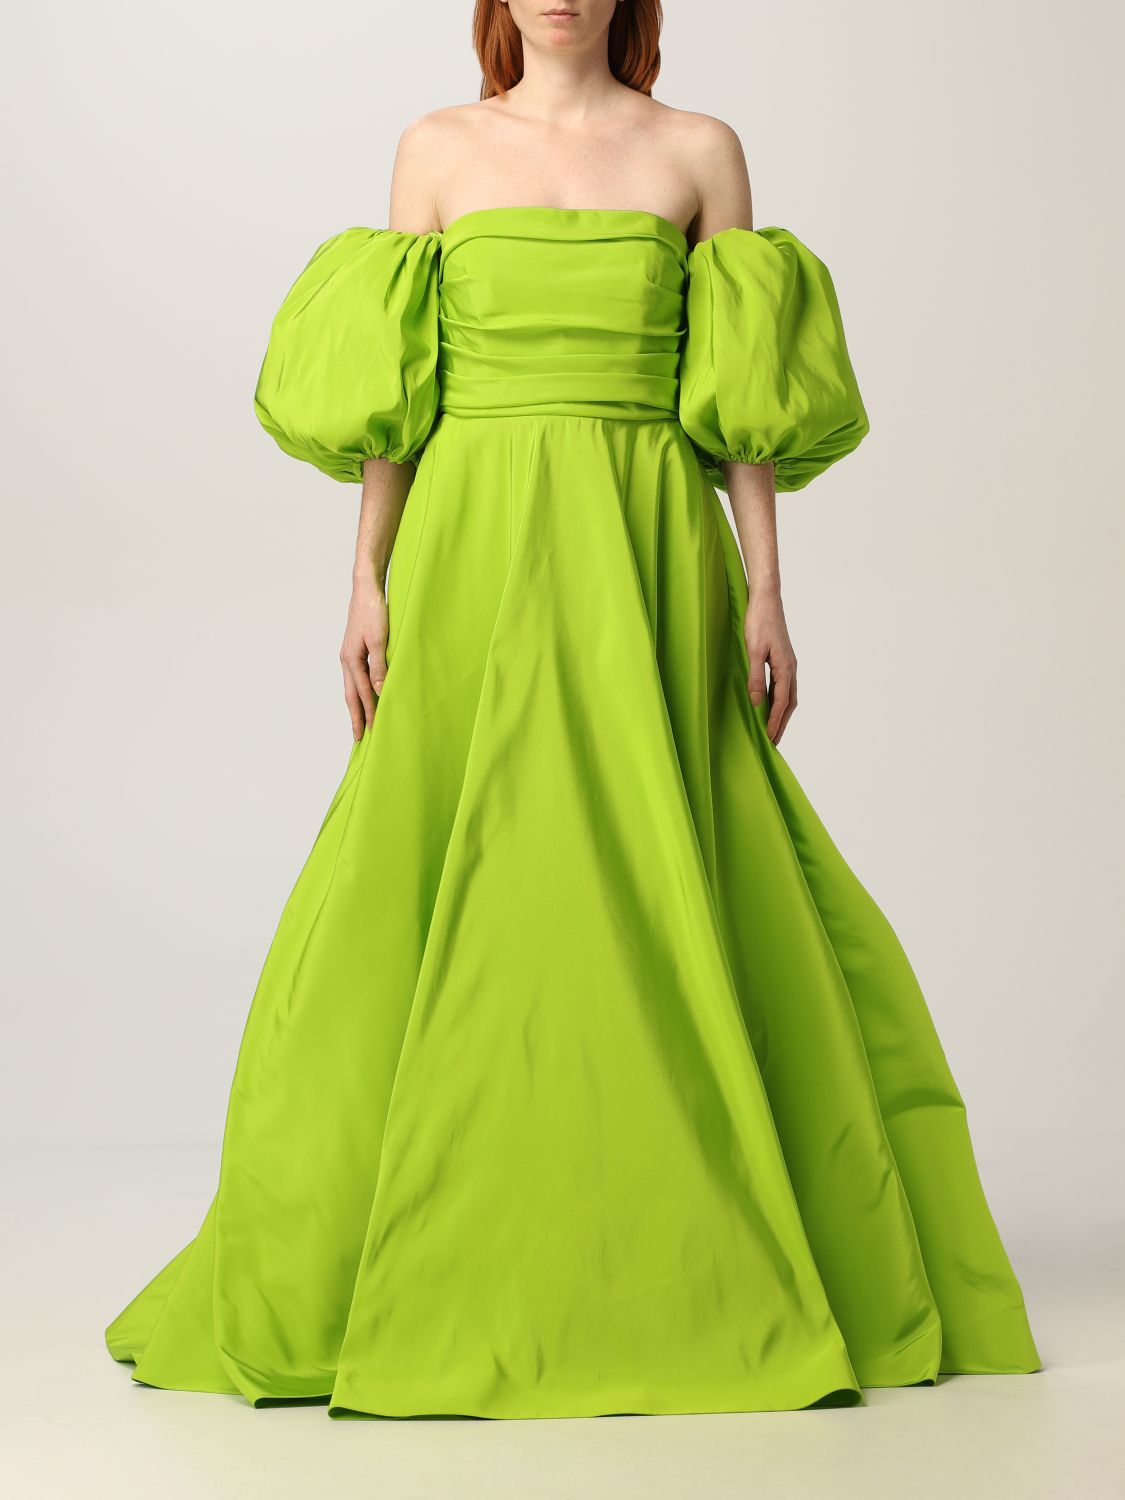 VALENTINO: silk long dress - Lime | Valentino dress online on GIGLIO.COM